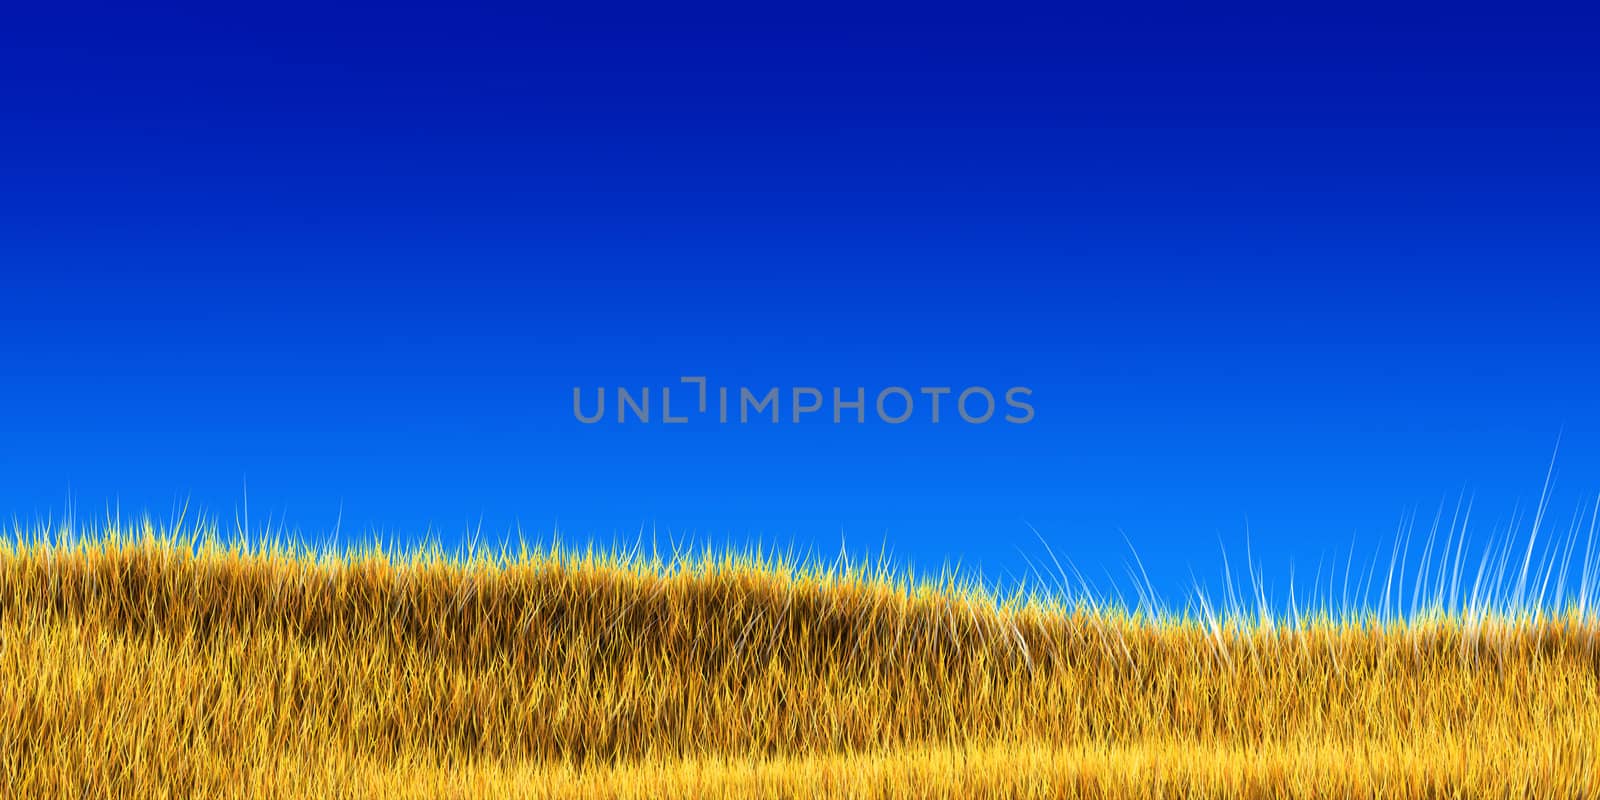 Dry yellow grass field under a blue sky